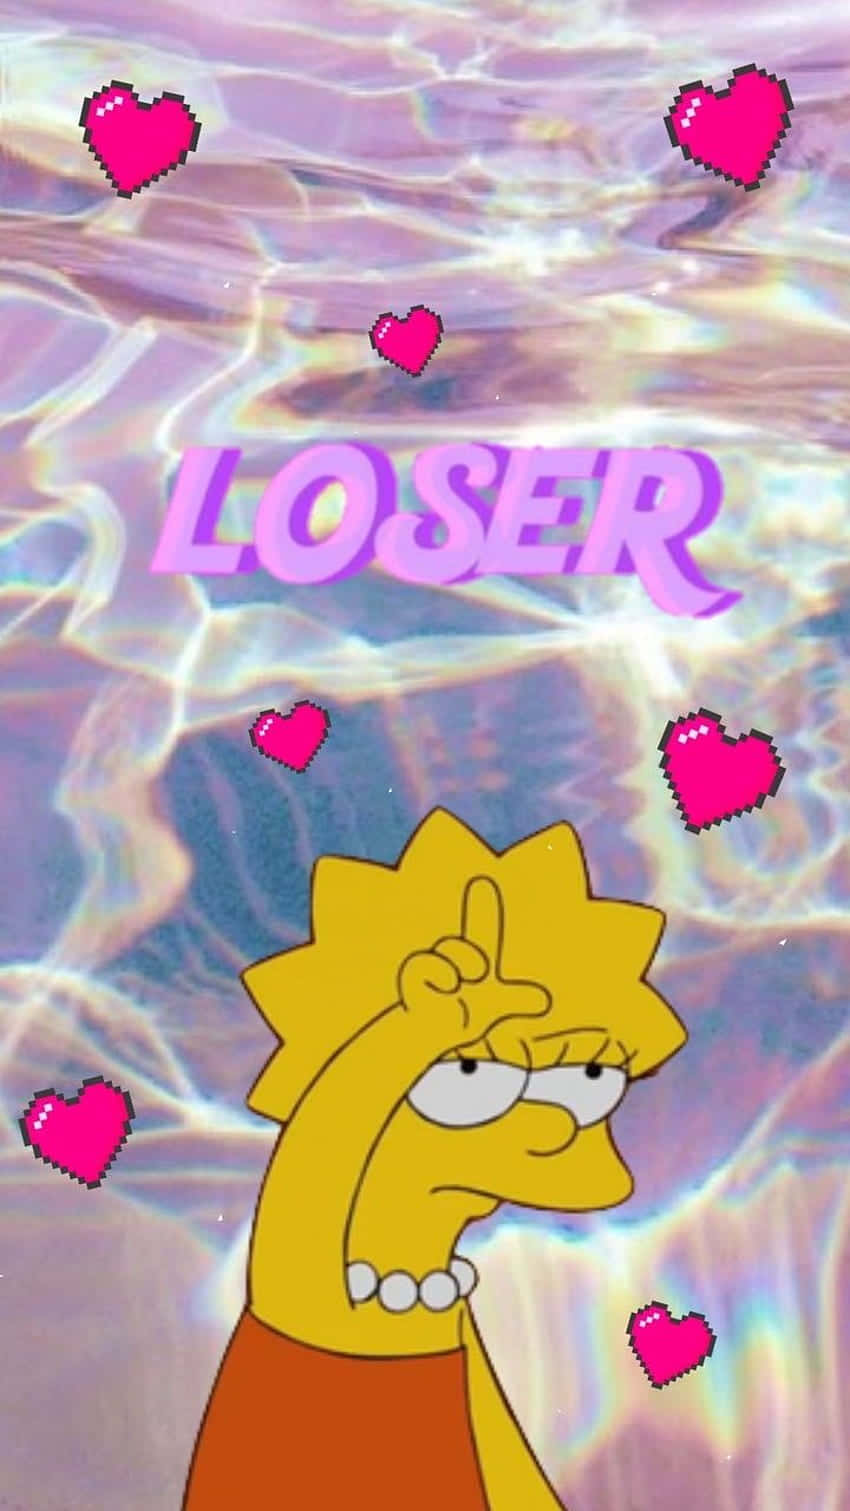 Simpsons-karakteren er i vandet med hjerter omkring hende. Wallpaper